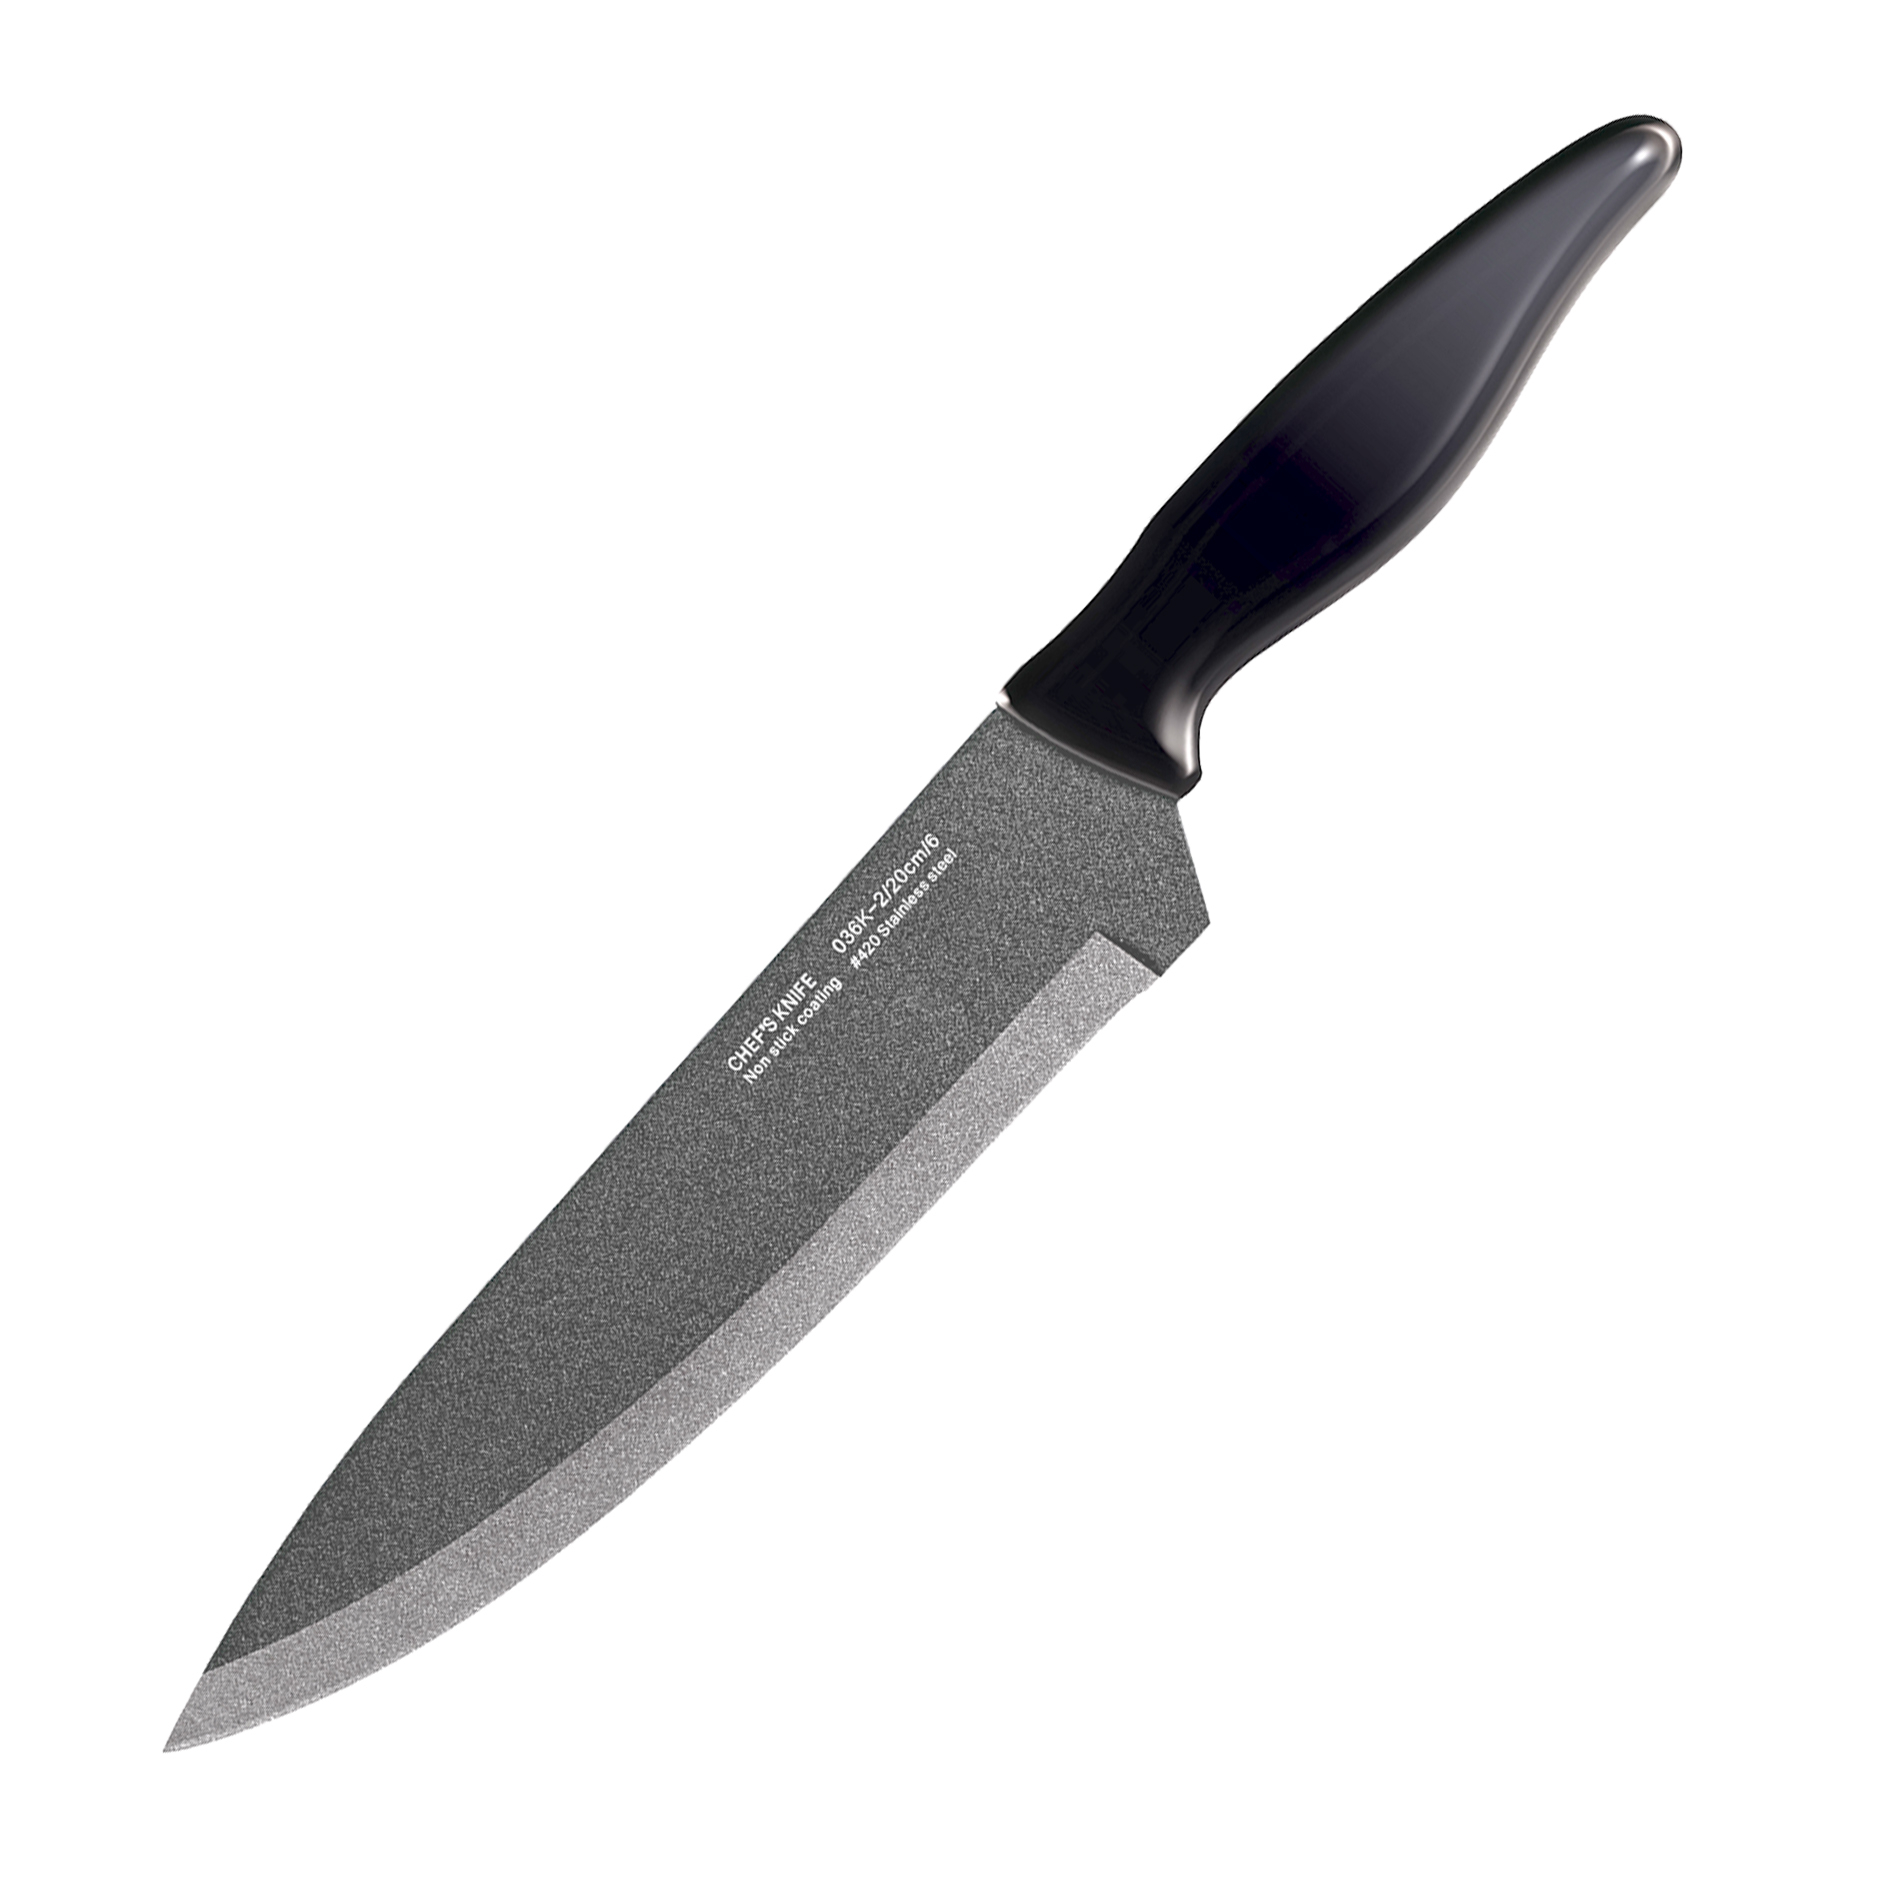 Smile SNS-4 Tacoma Juego de 5 cuchillos de cocina de acero inoxidable con recubrimiento antiadherente, bloque madera magnético plegable linea moderna 